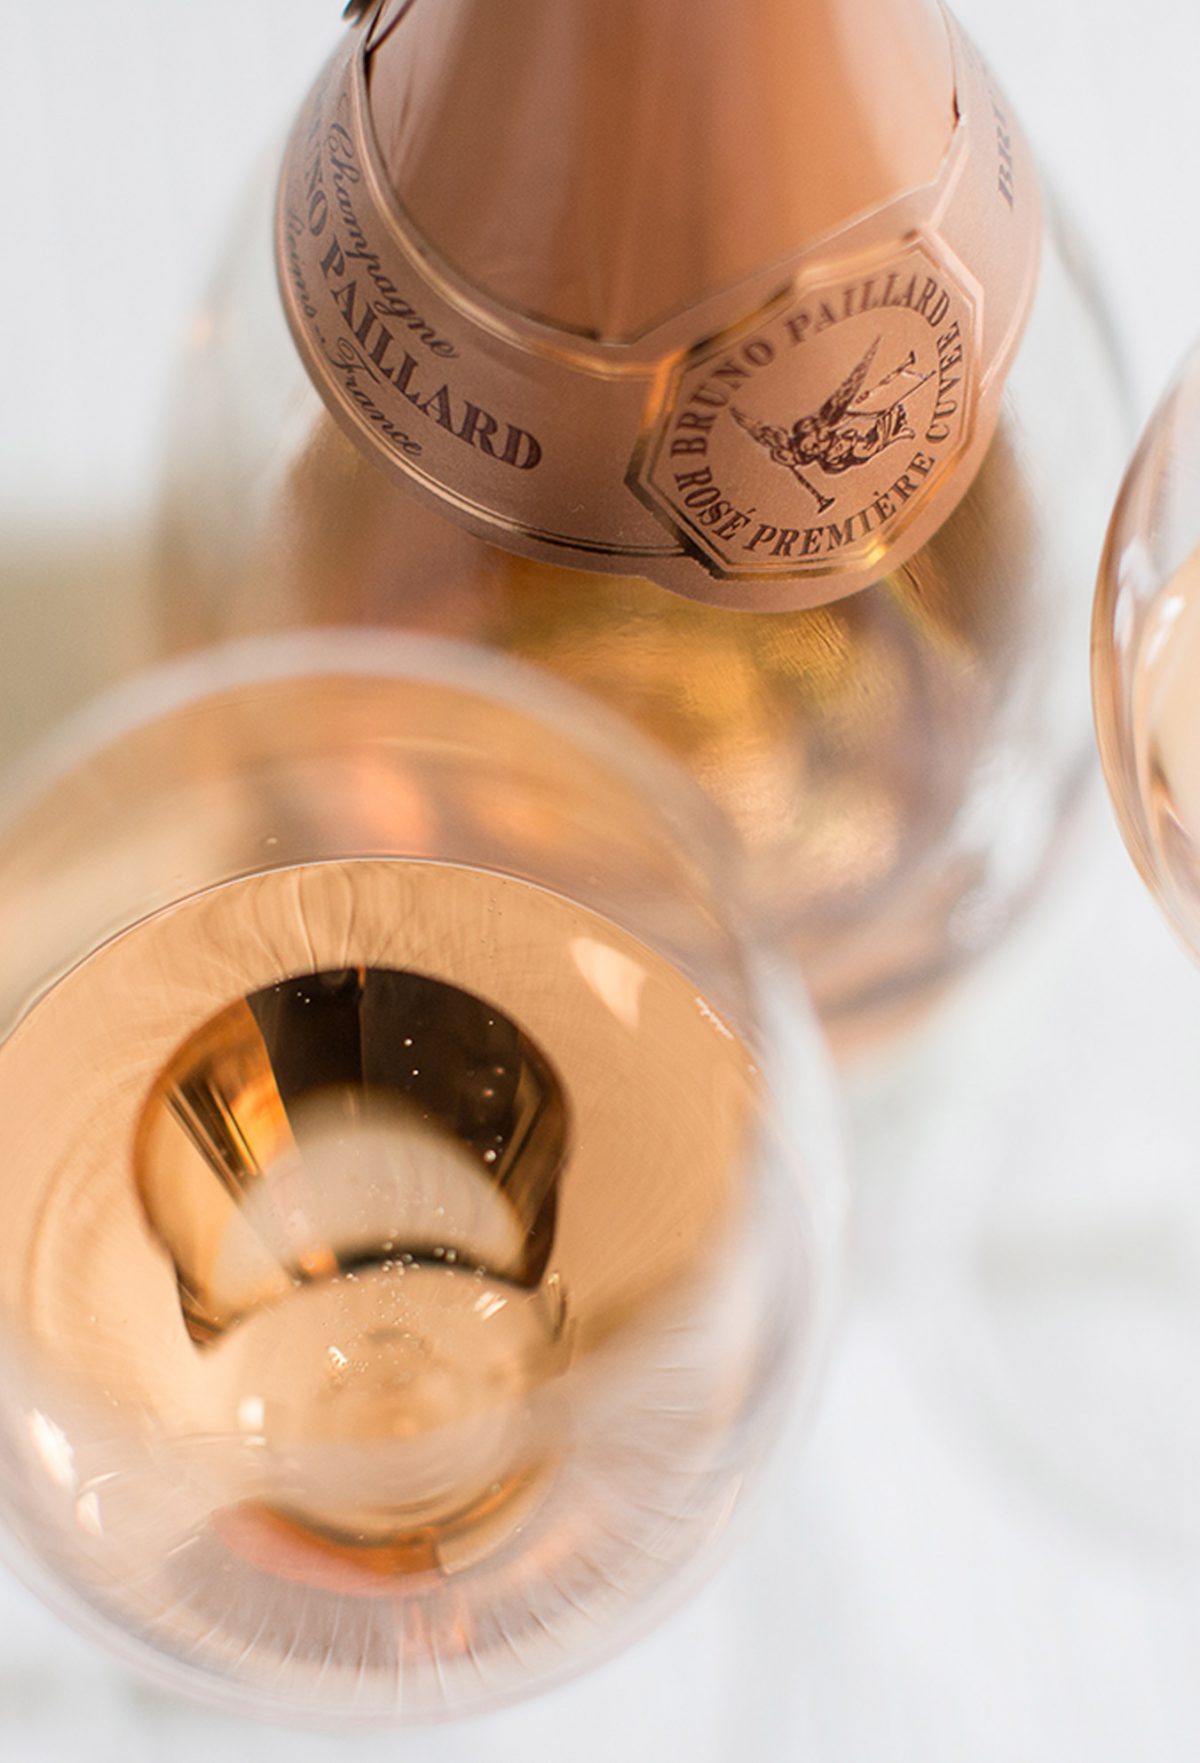 Champagne Bruno Paillard to showcase its Multi Vintage Première Cuvée Rosé at LIWF